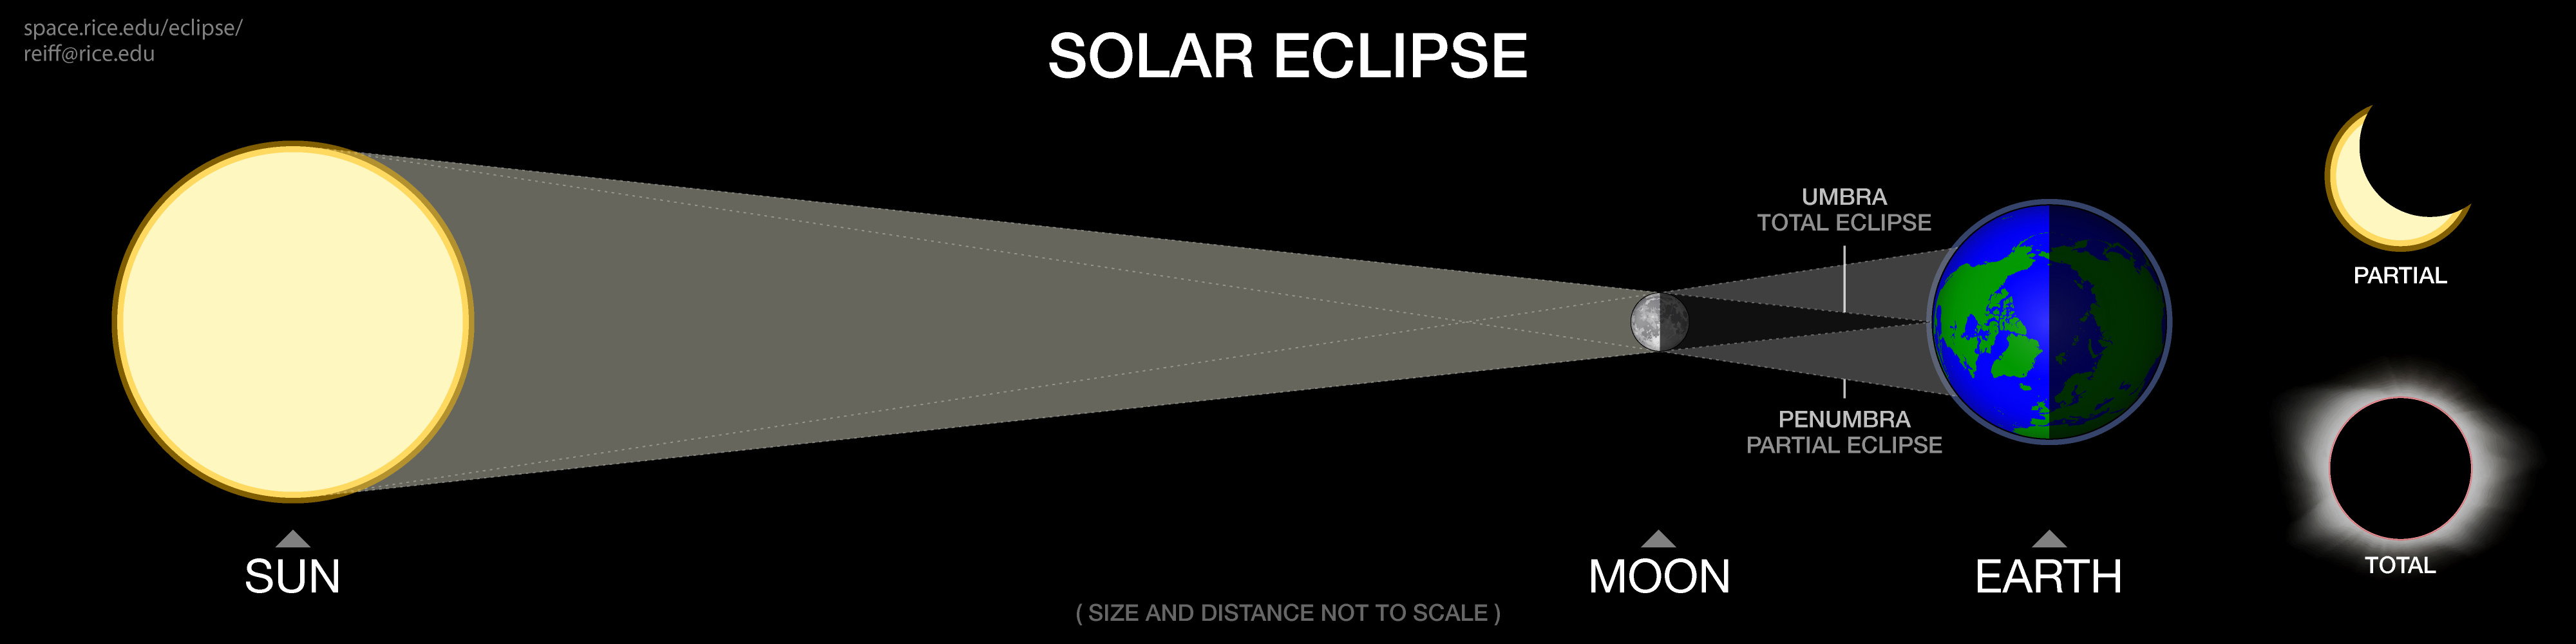 eclipse_diagram_solar.jpg